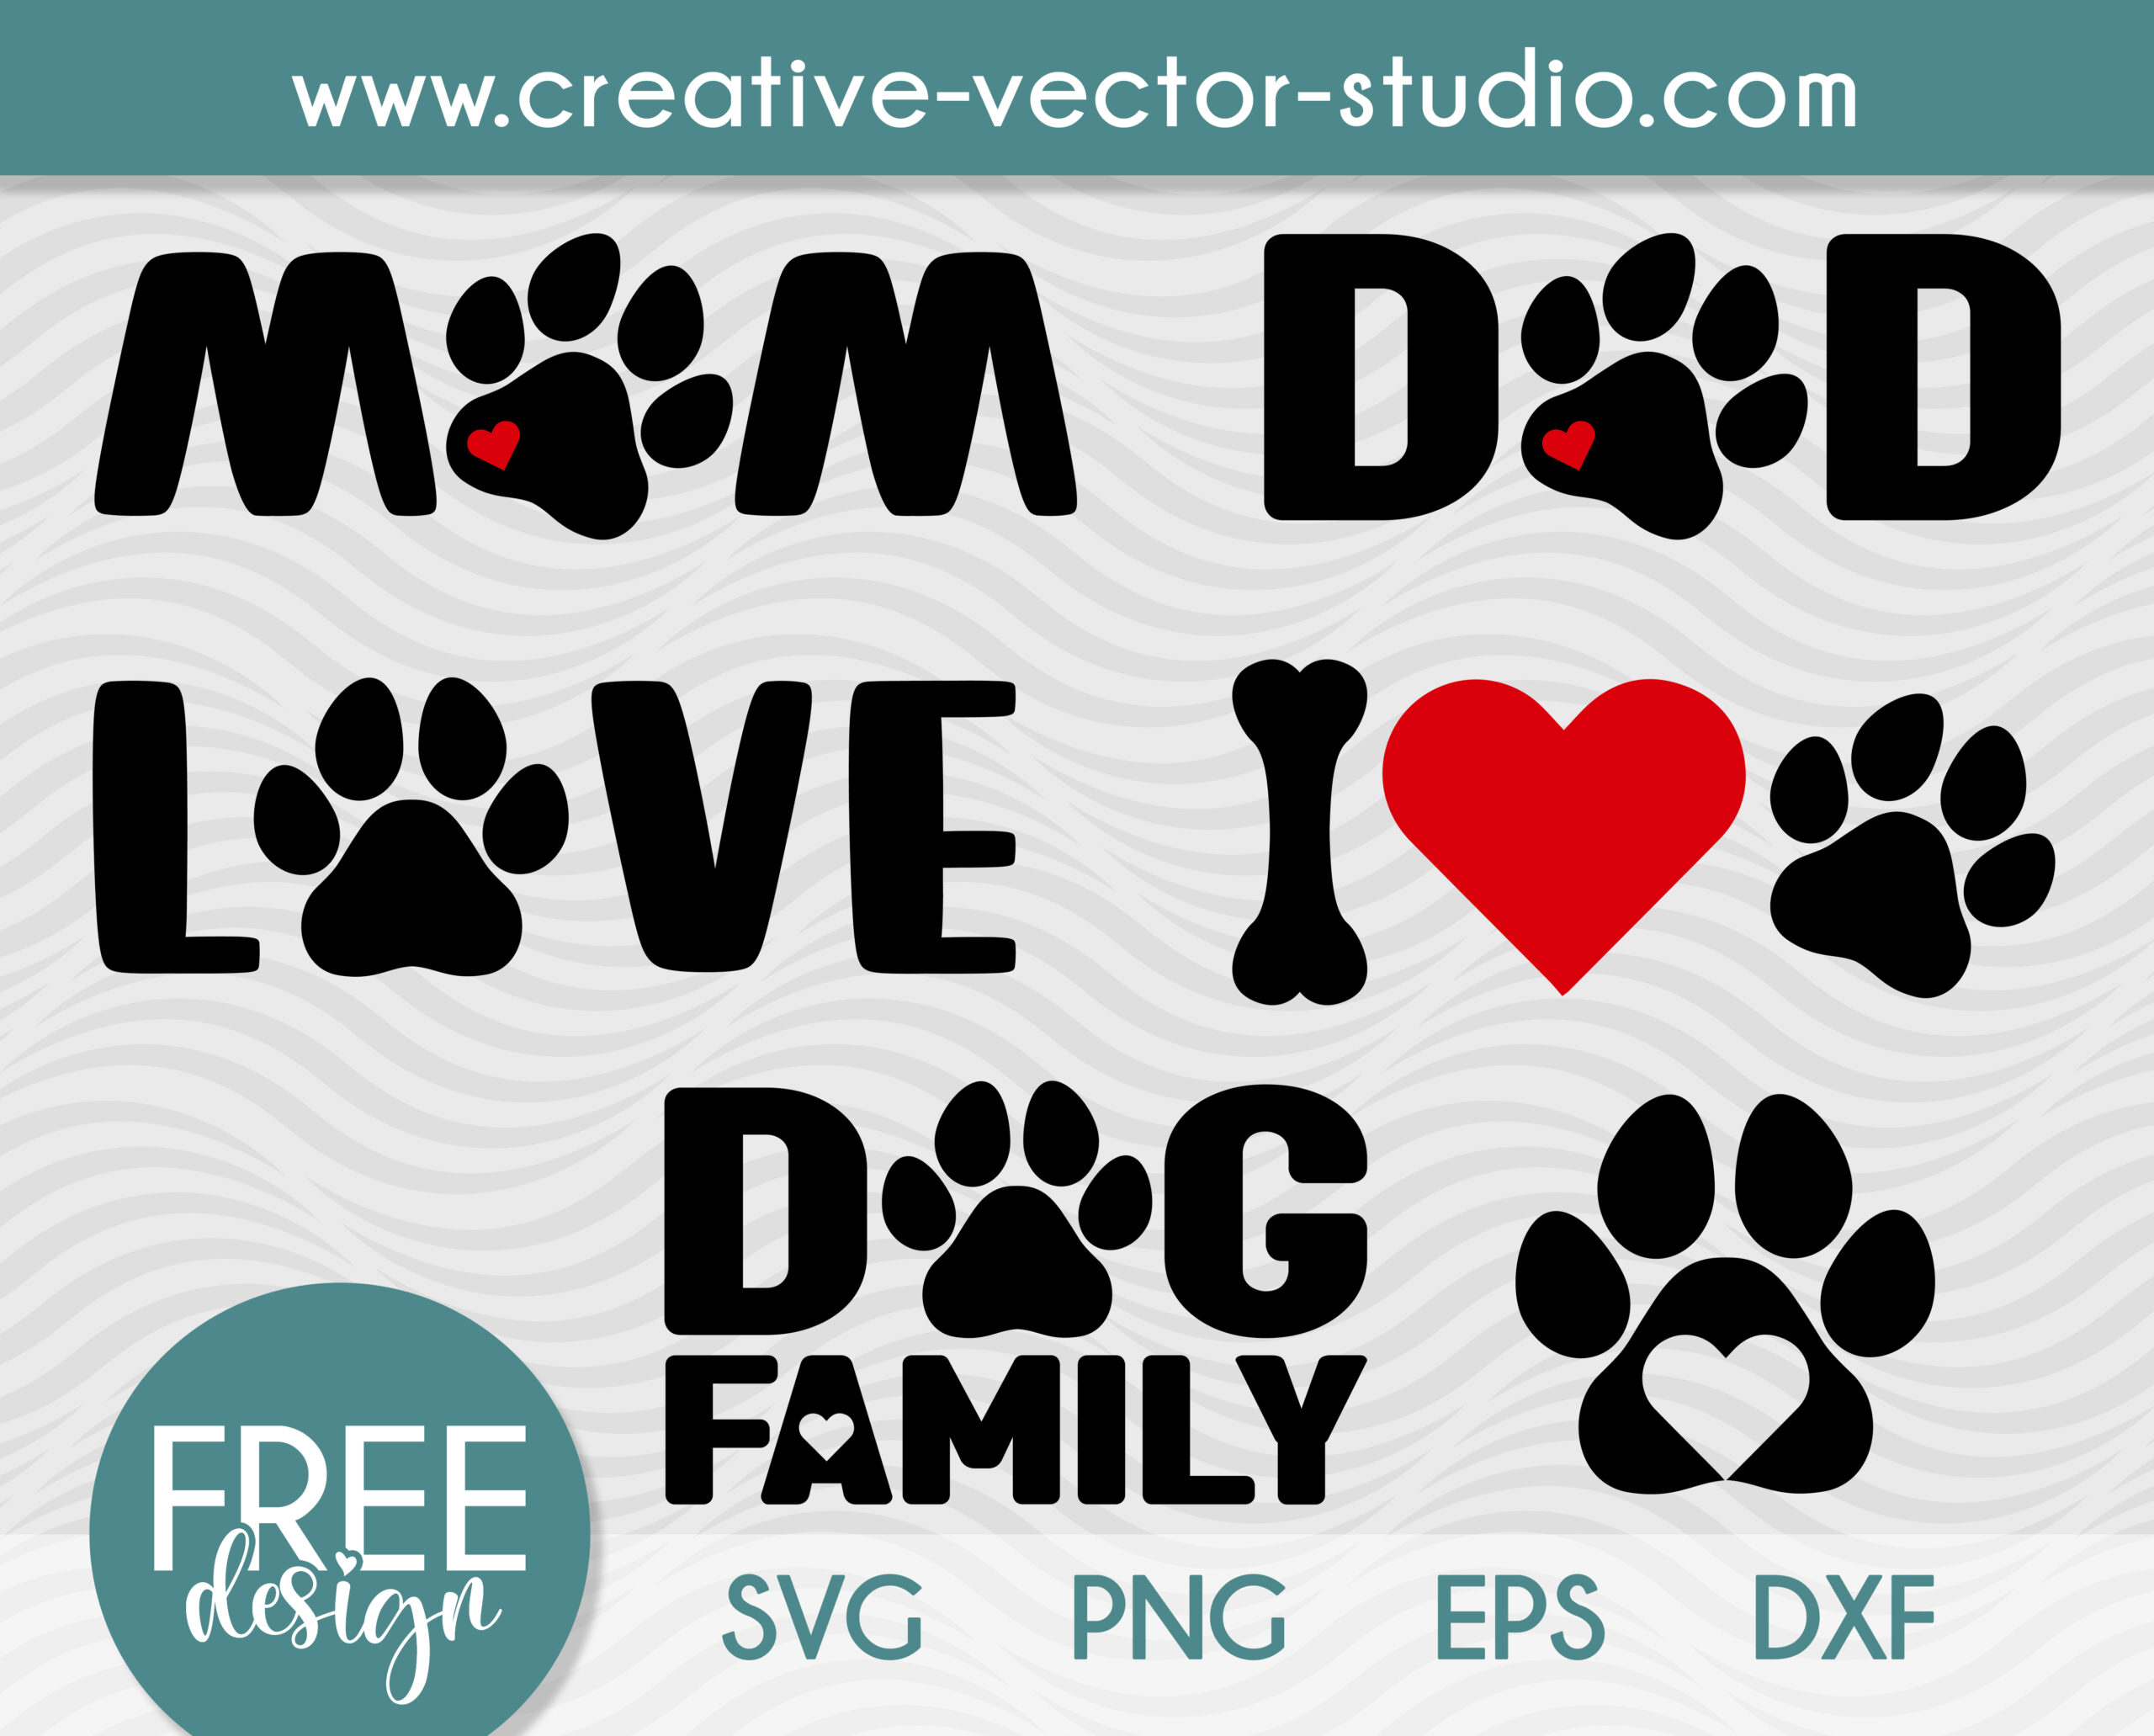 Free Dog Family SVG, Free Paw Print SVG - Creative Vector Studio